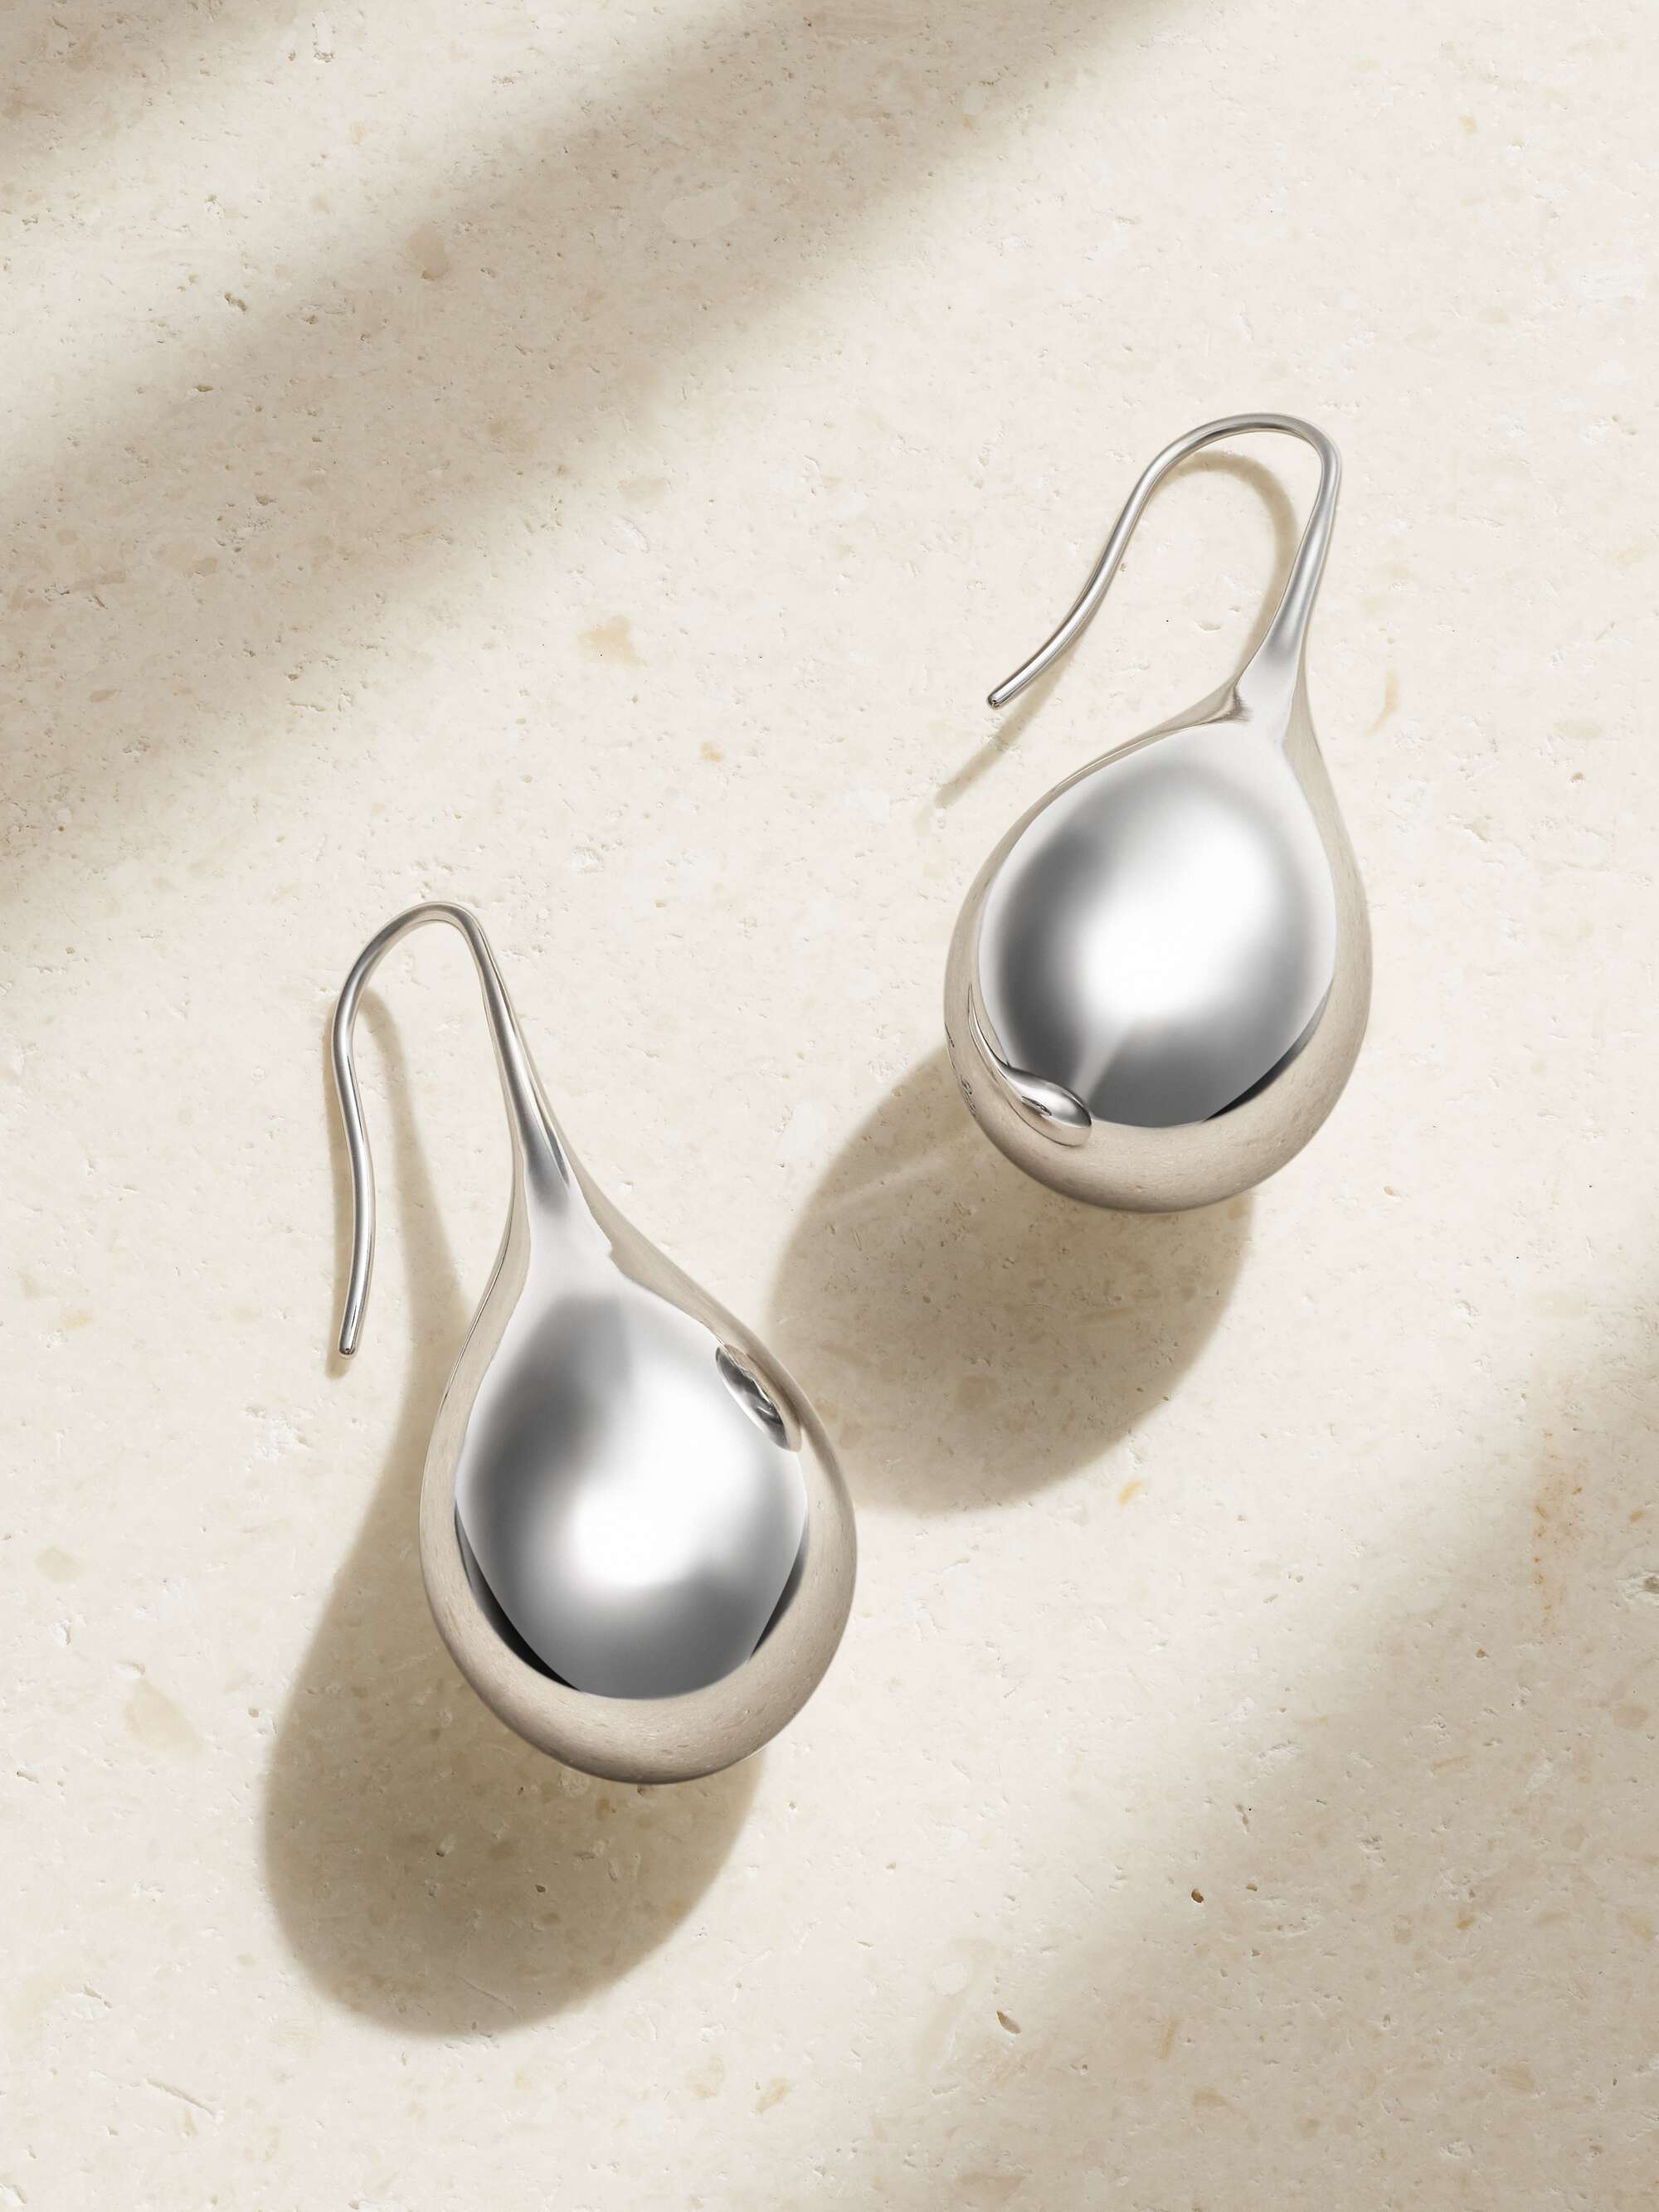 By Pariah + Drop Large Recycled Sterling Silver Earrings